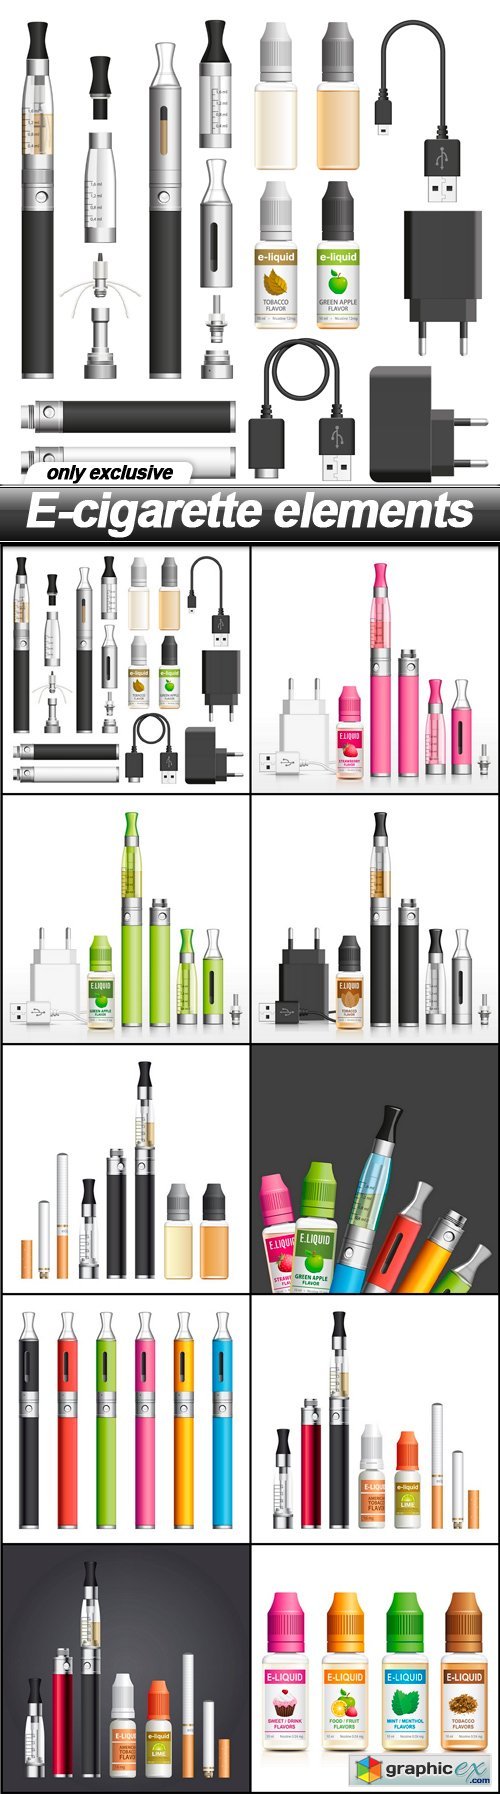 E-cigarette elements - 10 EPS